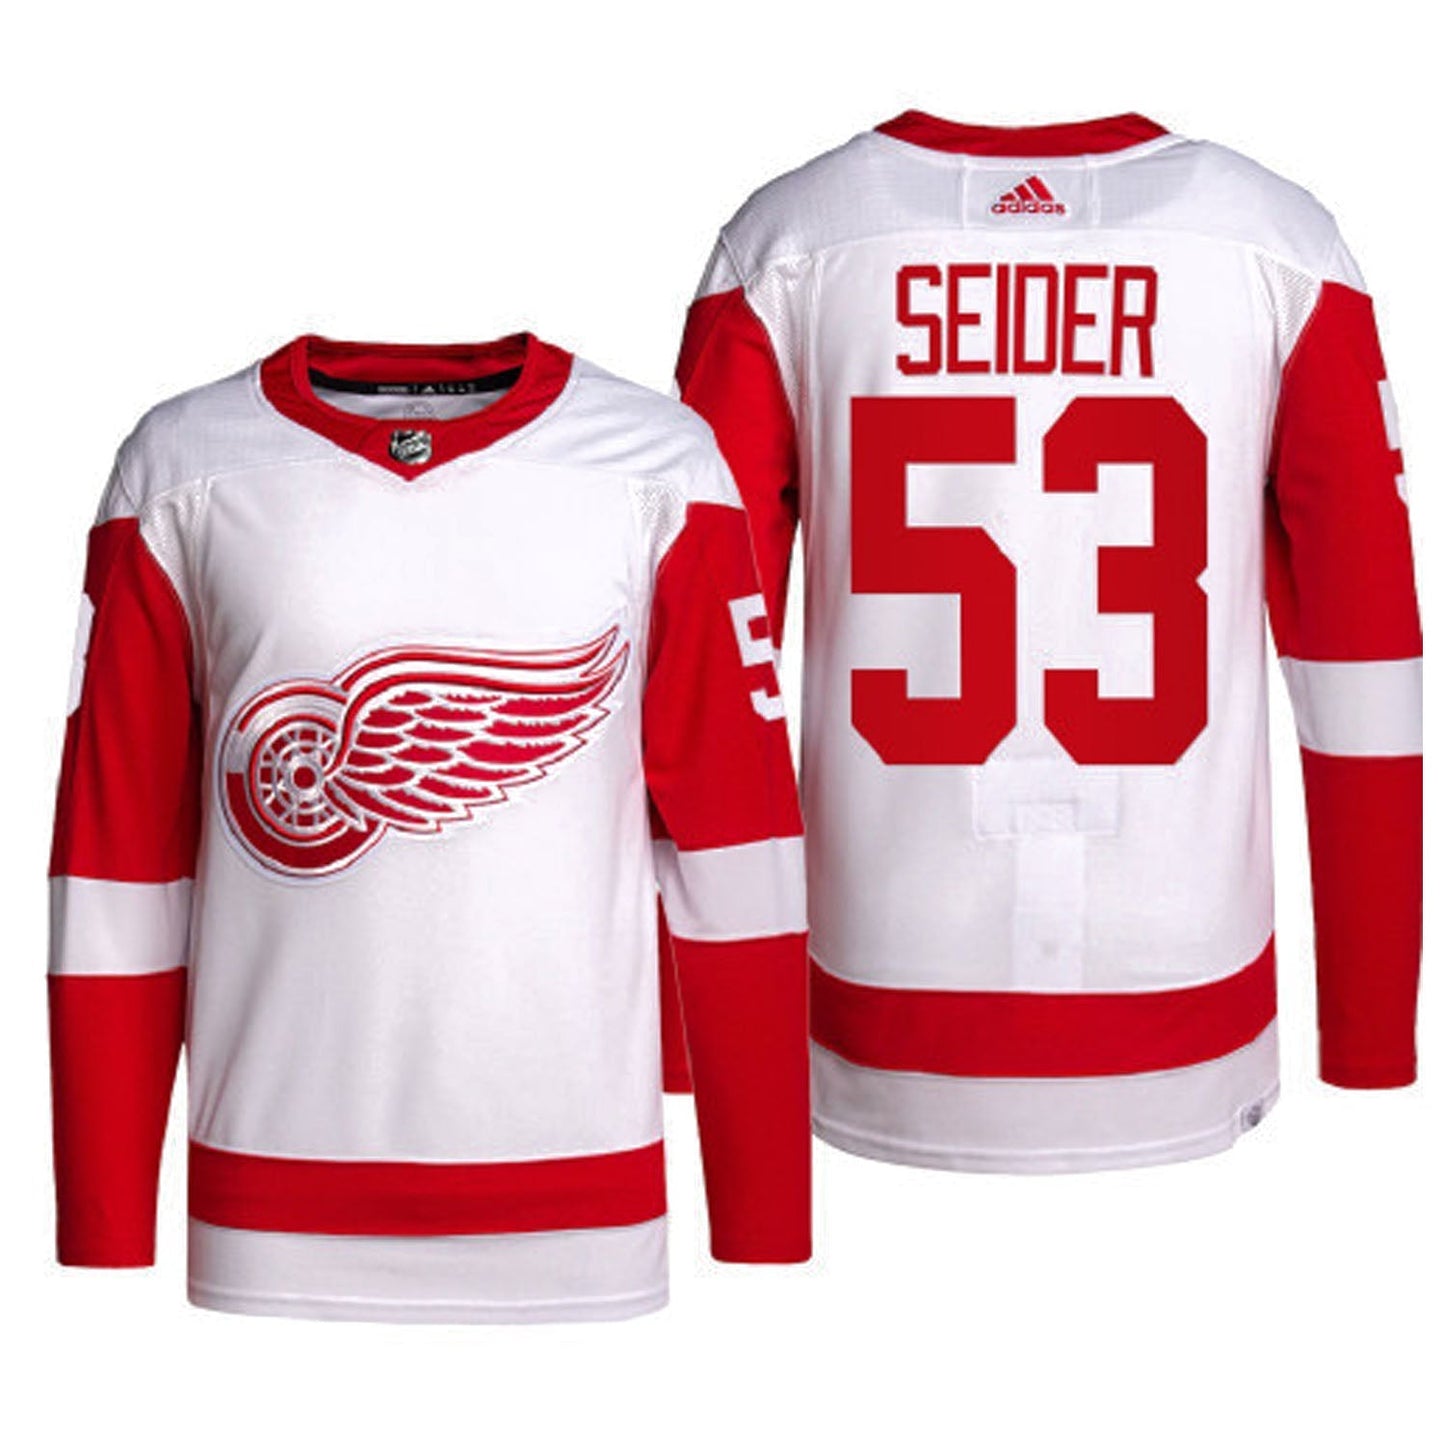 ICYMI: Red Wings defenseman Moritz Seider wears jersey No. 53